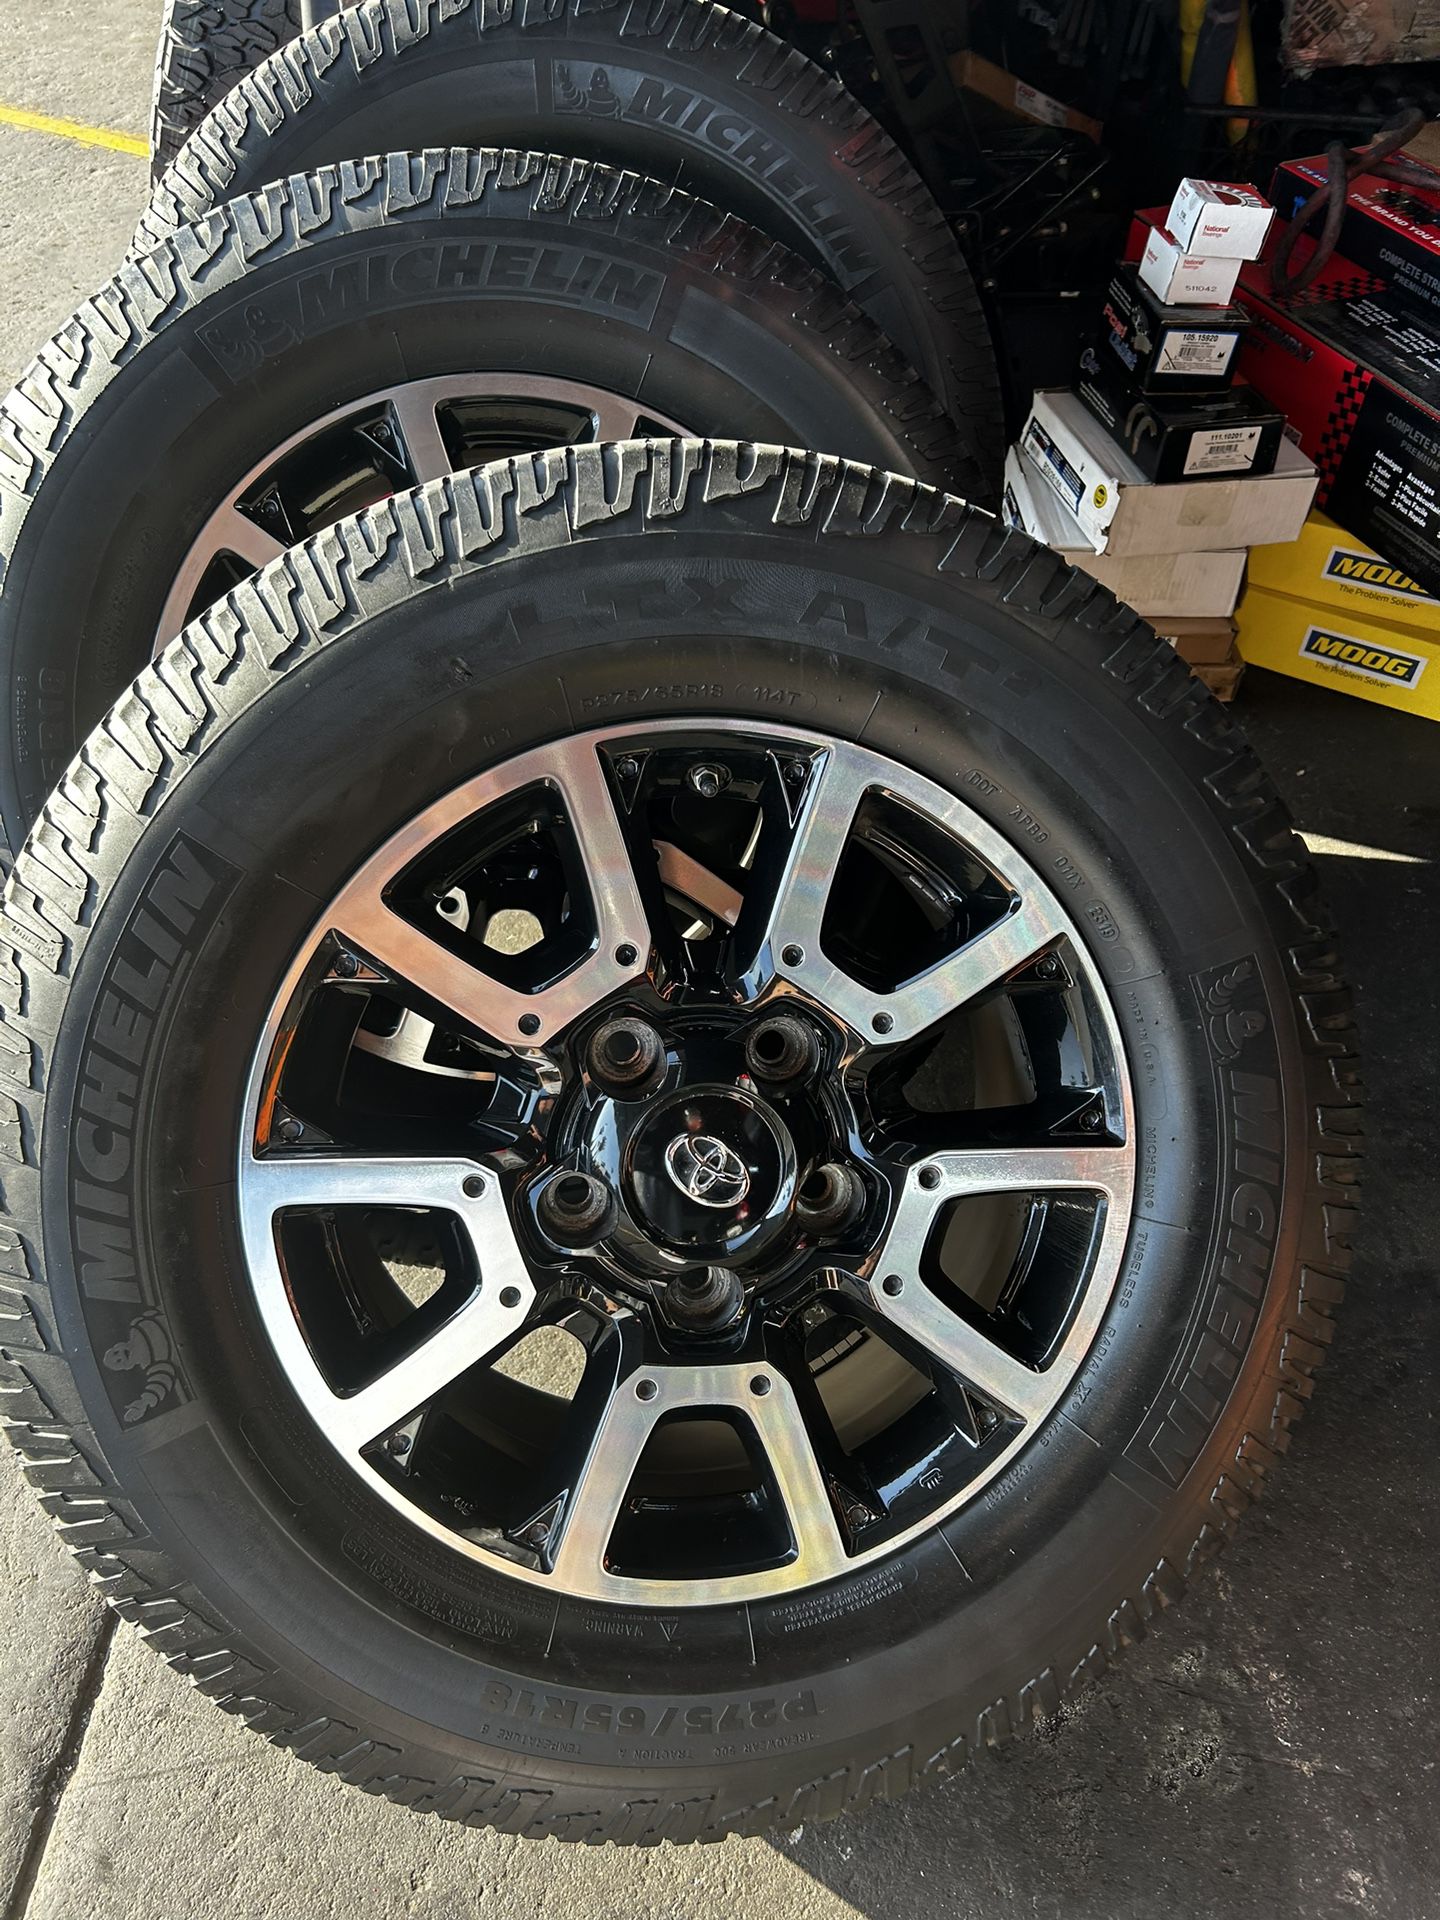 2019 Tundra Stock Tires And Rims